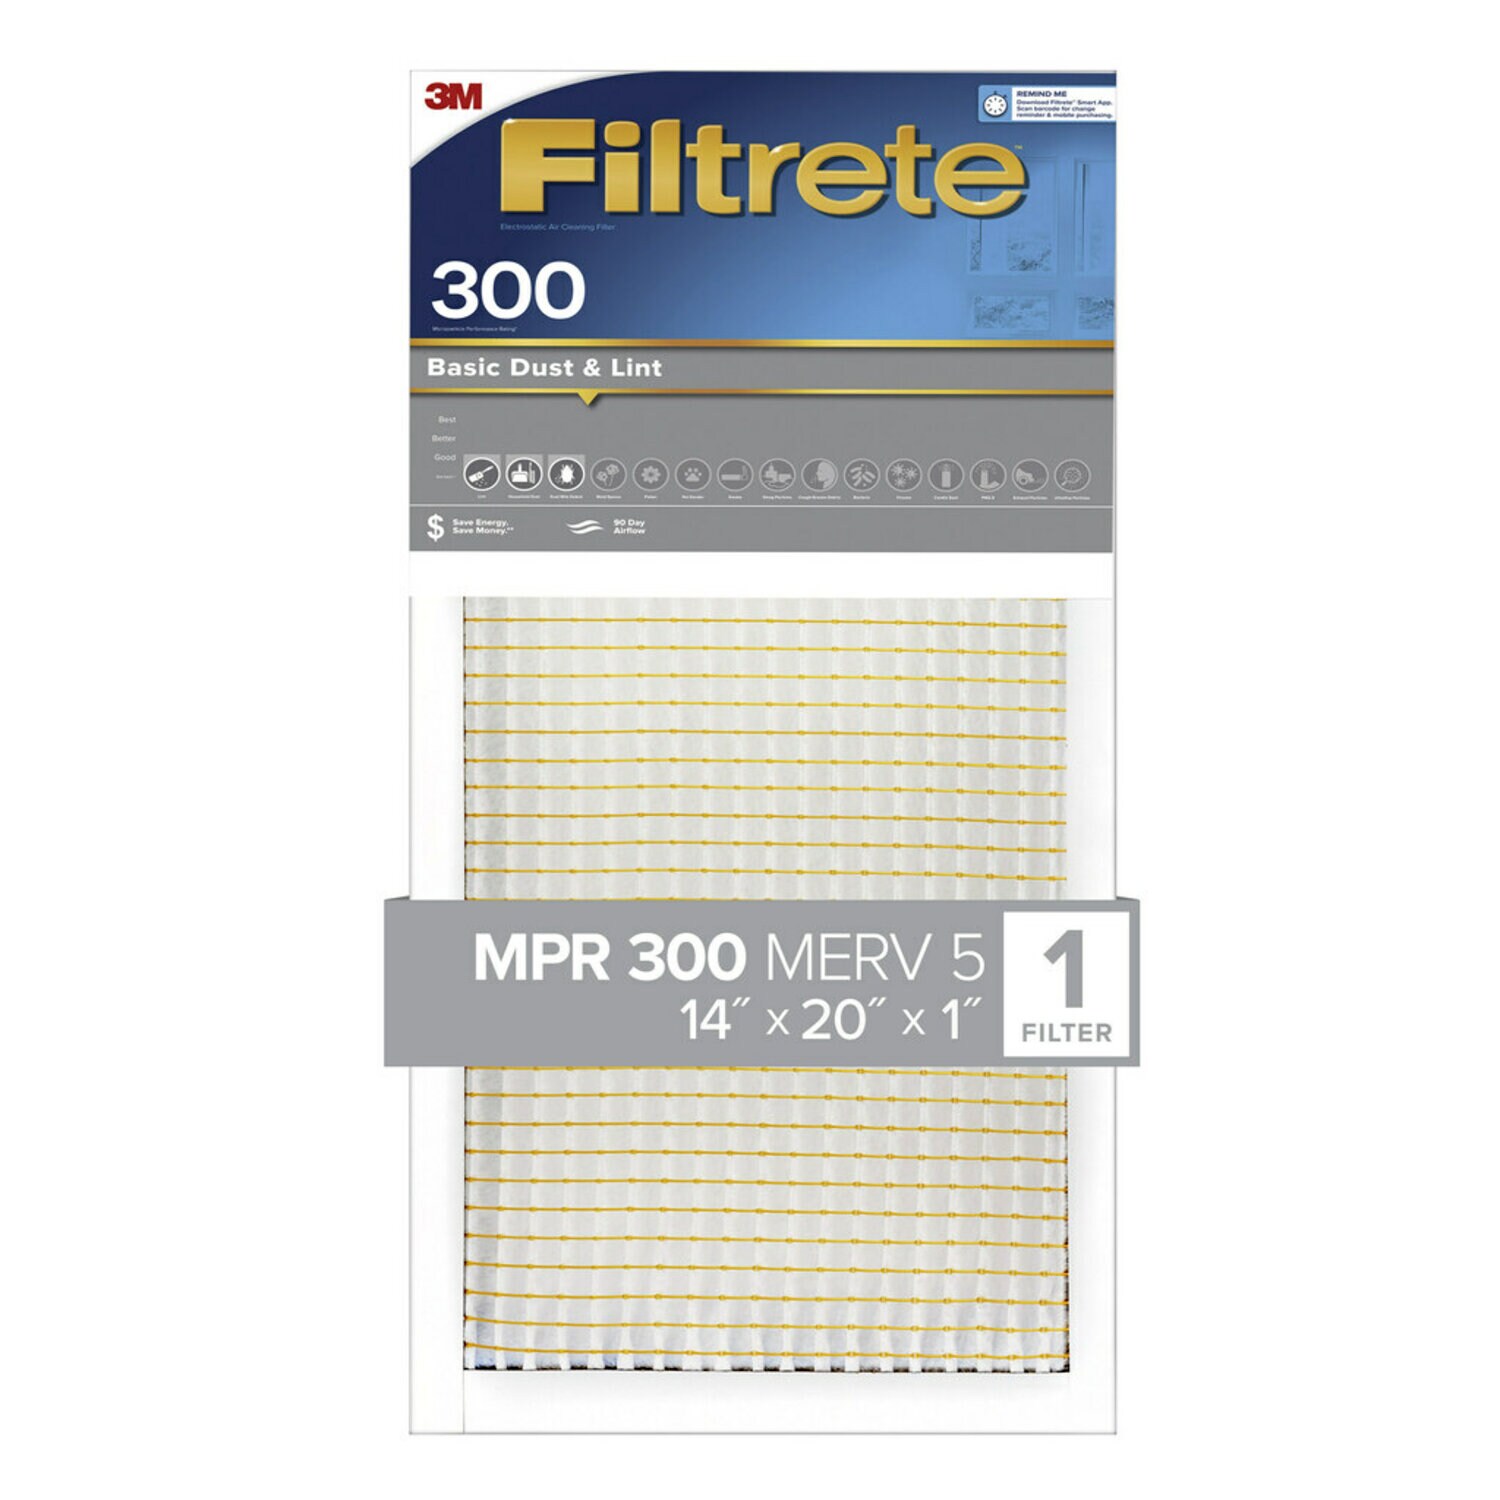 7100187903 - Filtrete Basic Dust & Lint Air Filter, 300 MPR, 305-4, 14 in x 20 in x
1 in (35.5 cm x 50.8 cm x 2.5 cm)